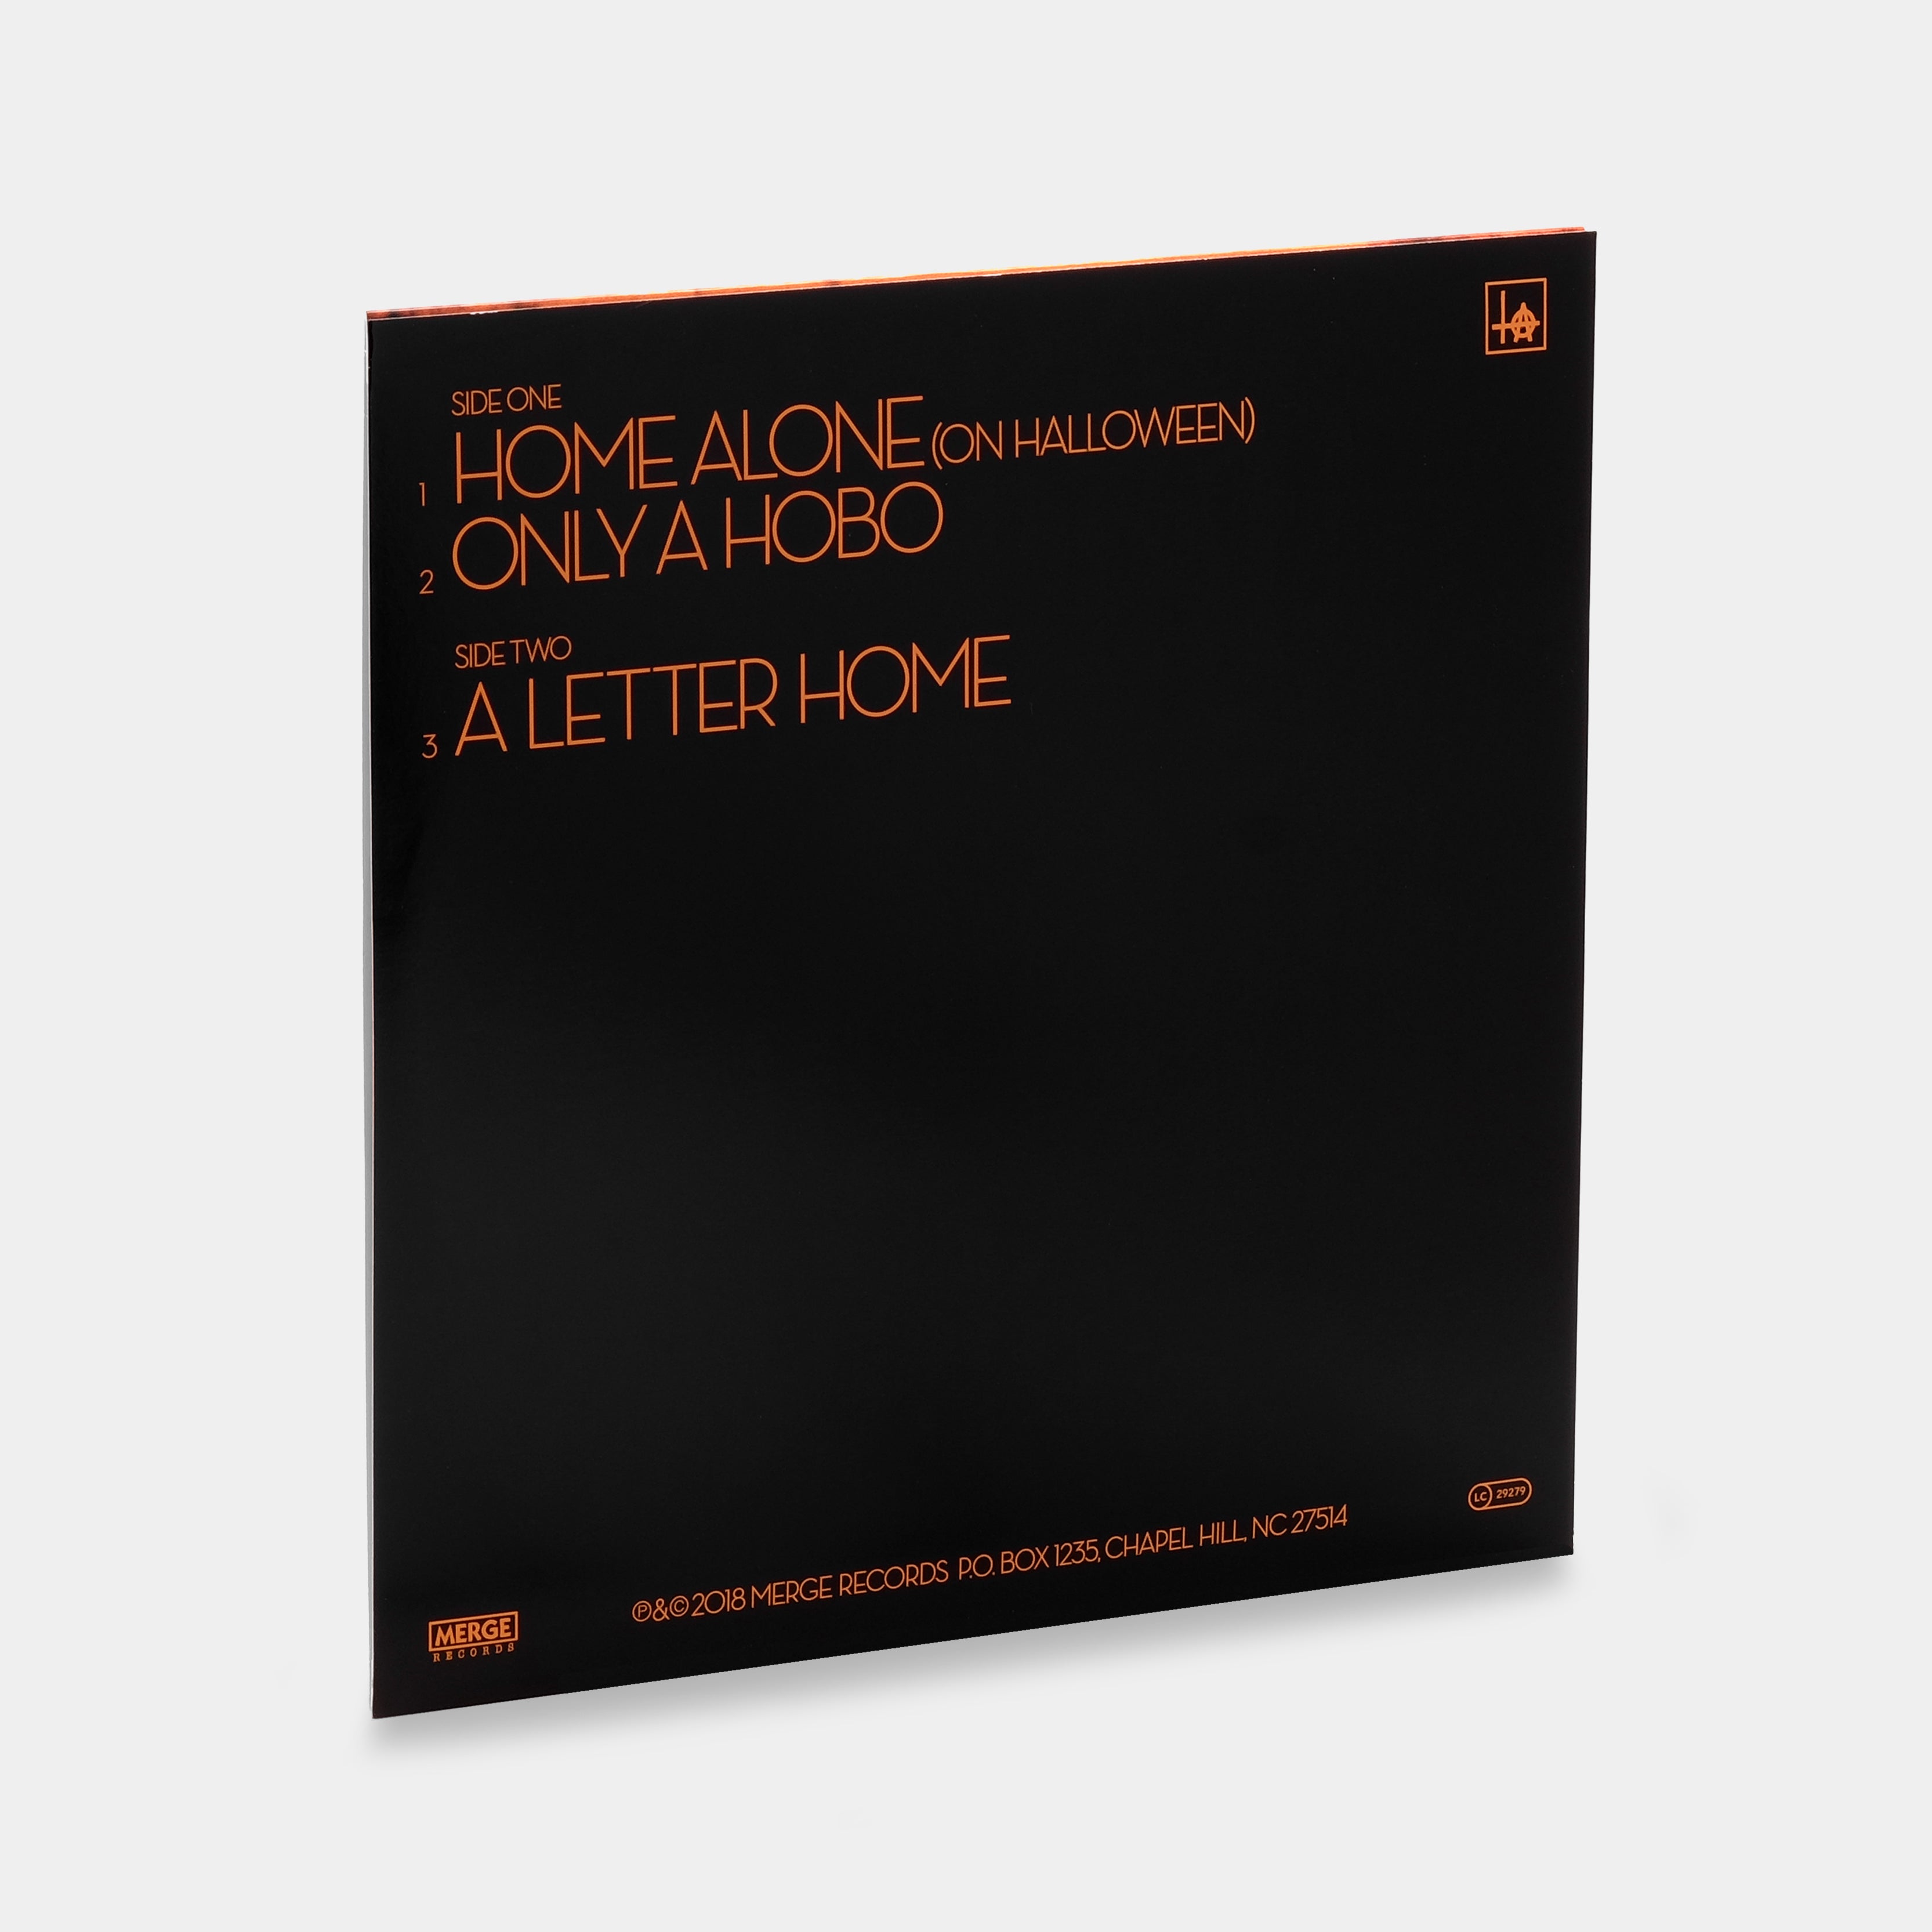 Titus Andronicus - Home Alone On Halloween EP Pumpkin Orange Vinyl Record